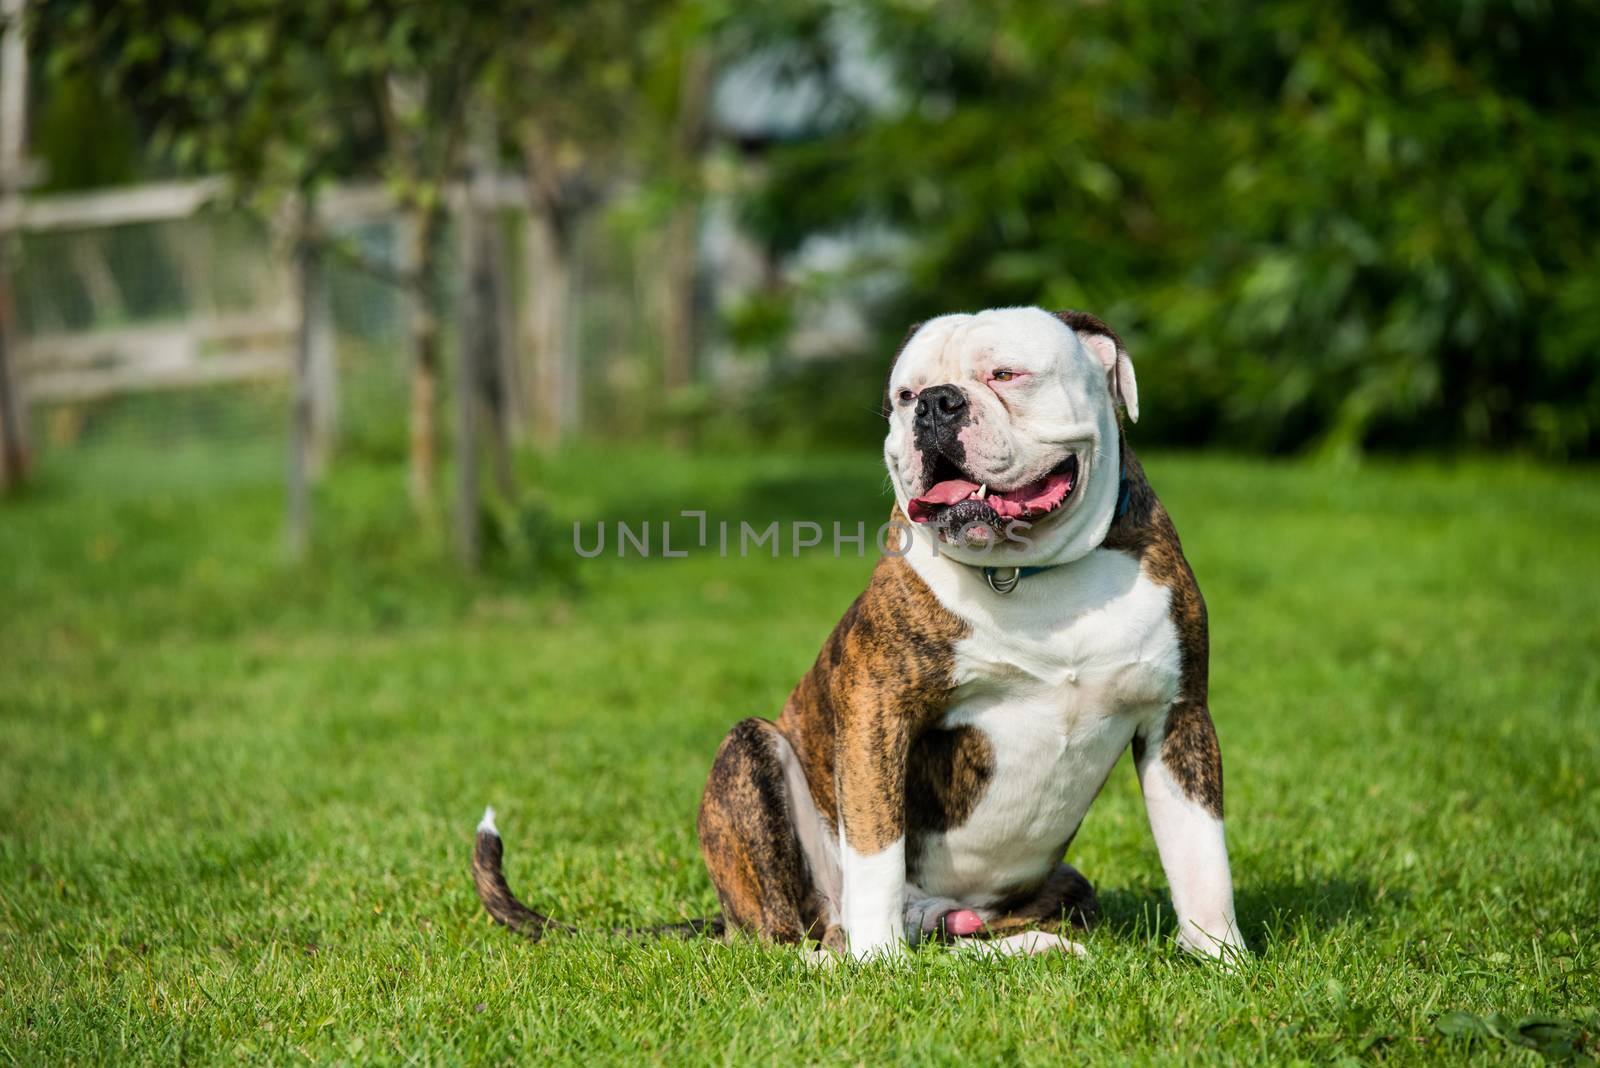 Brindle coat American Bulldog dog portrait in the yard